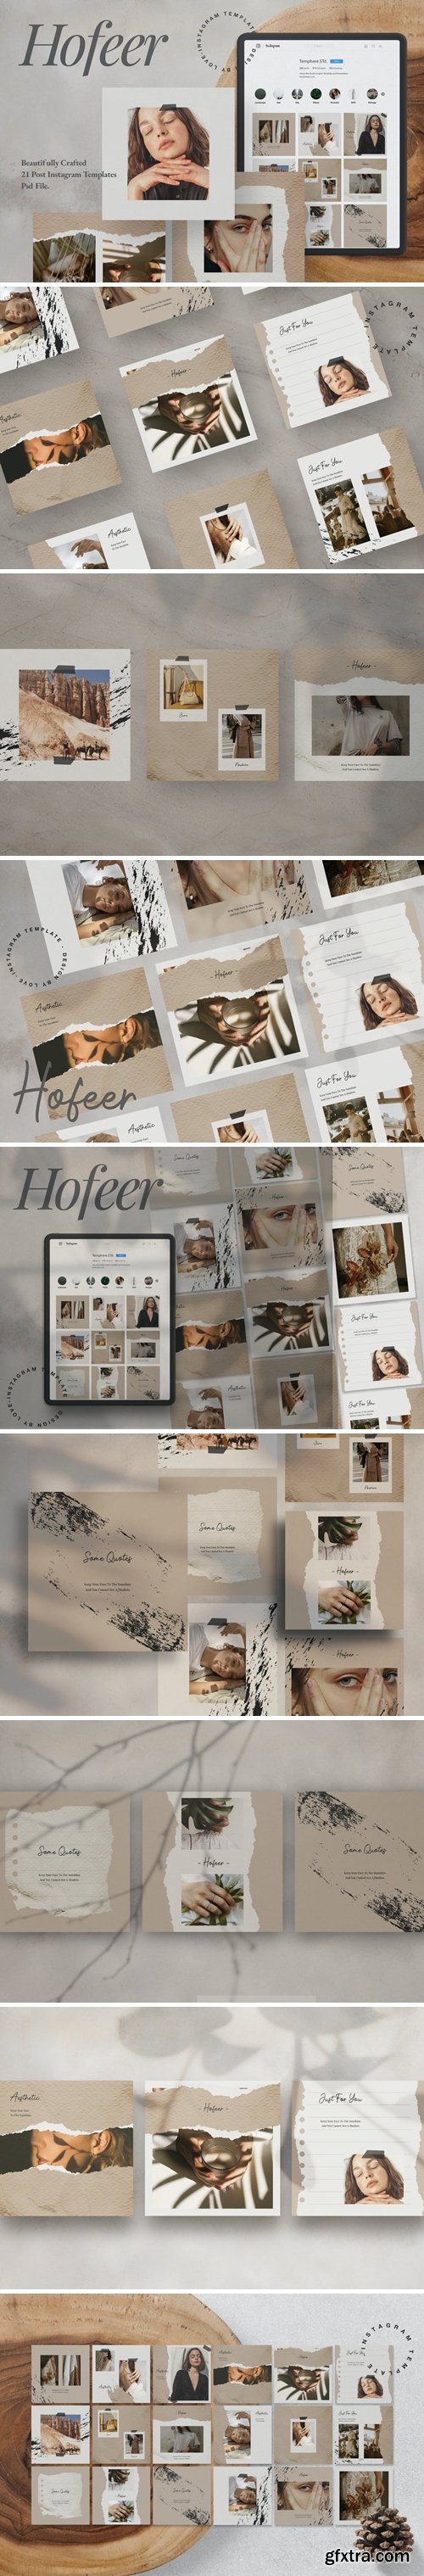 Hofeer Social Media Post Instagram